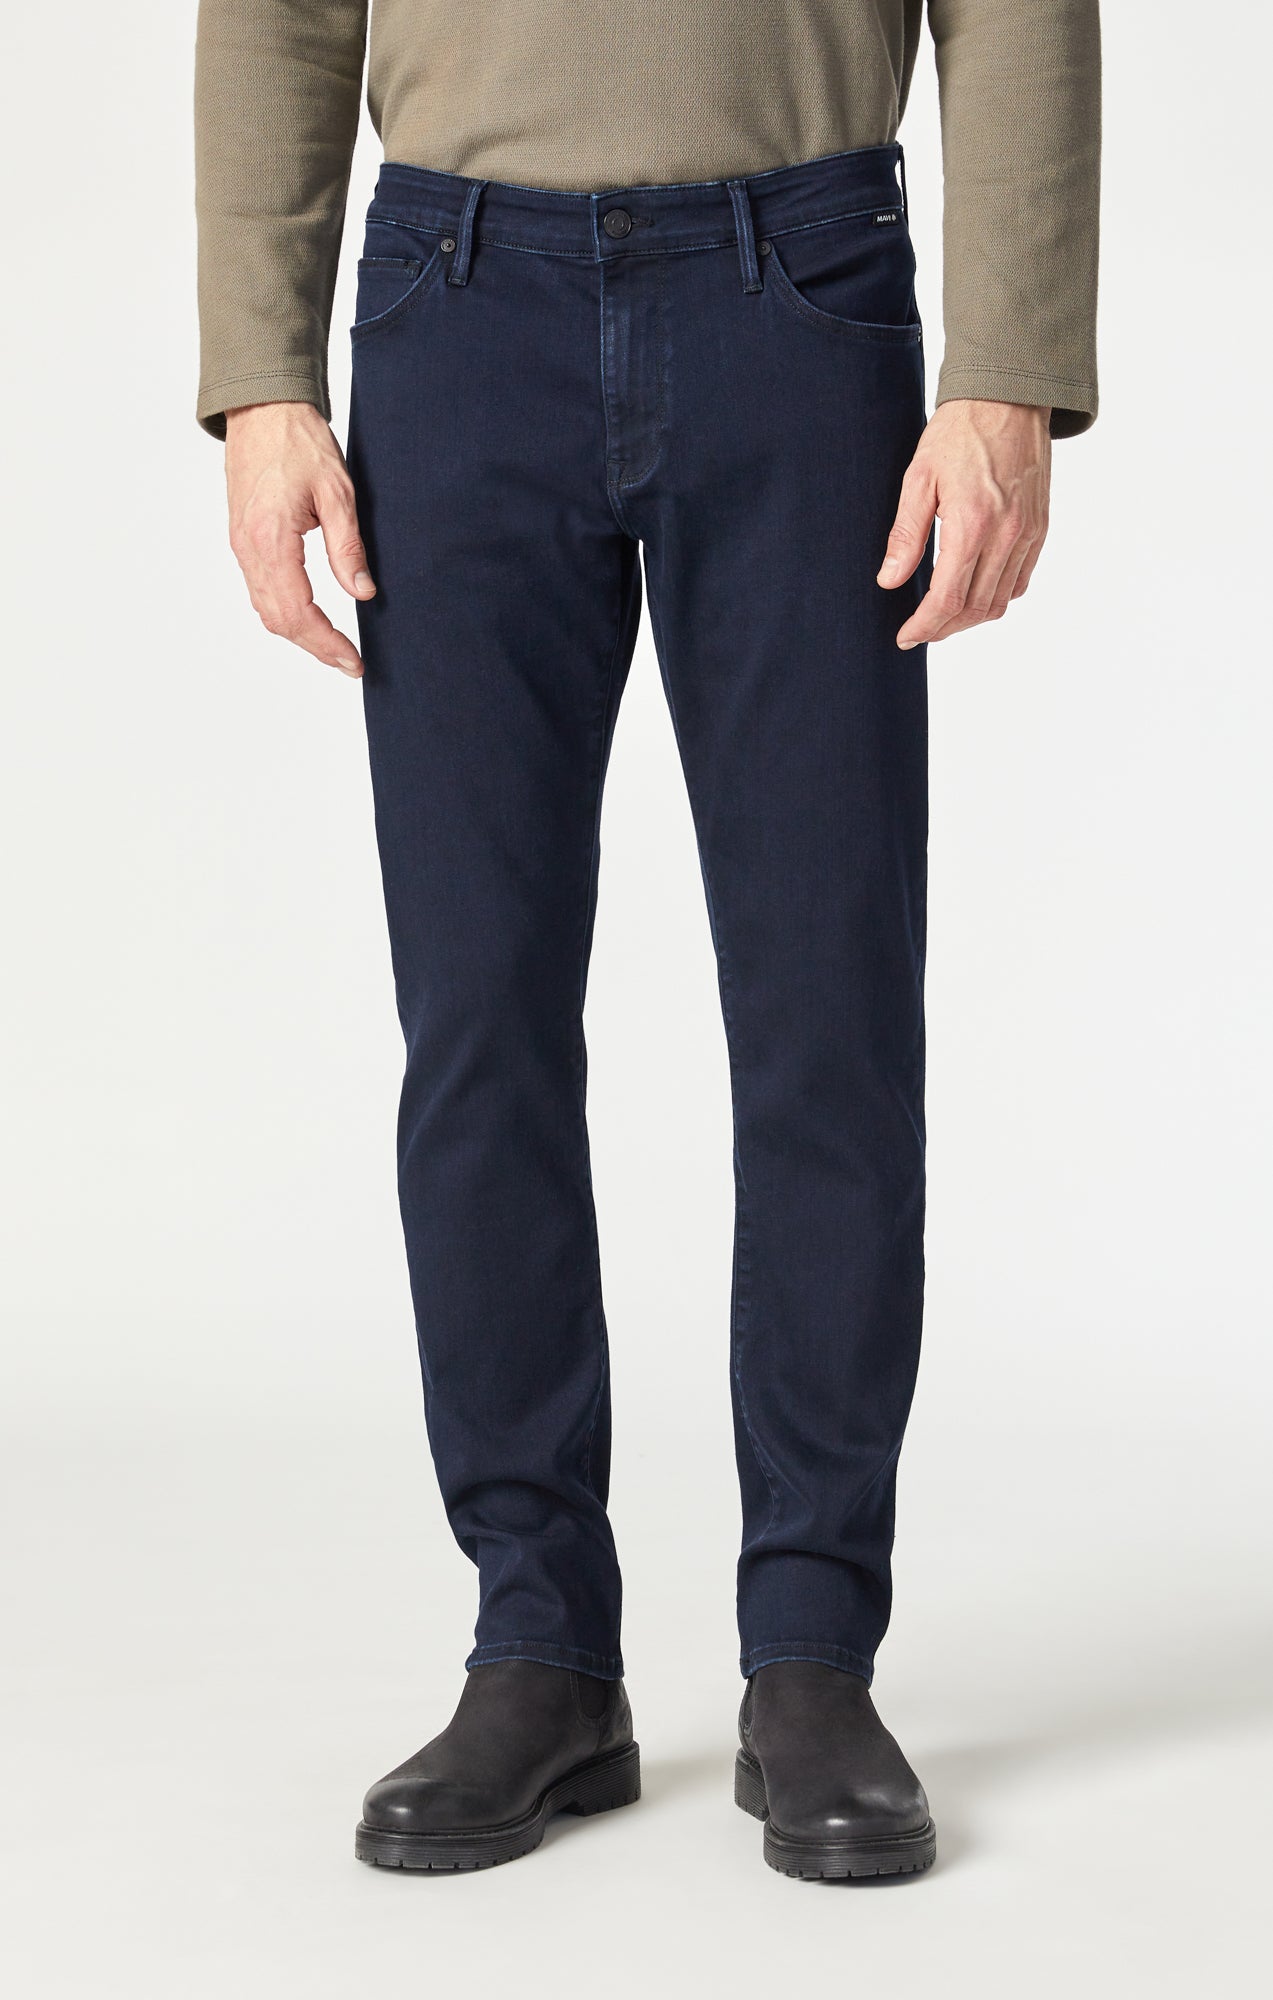 jsaierl Men's Solid Color Sports Pants Fashion Slim Pockets